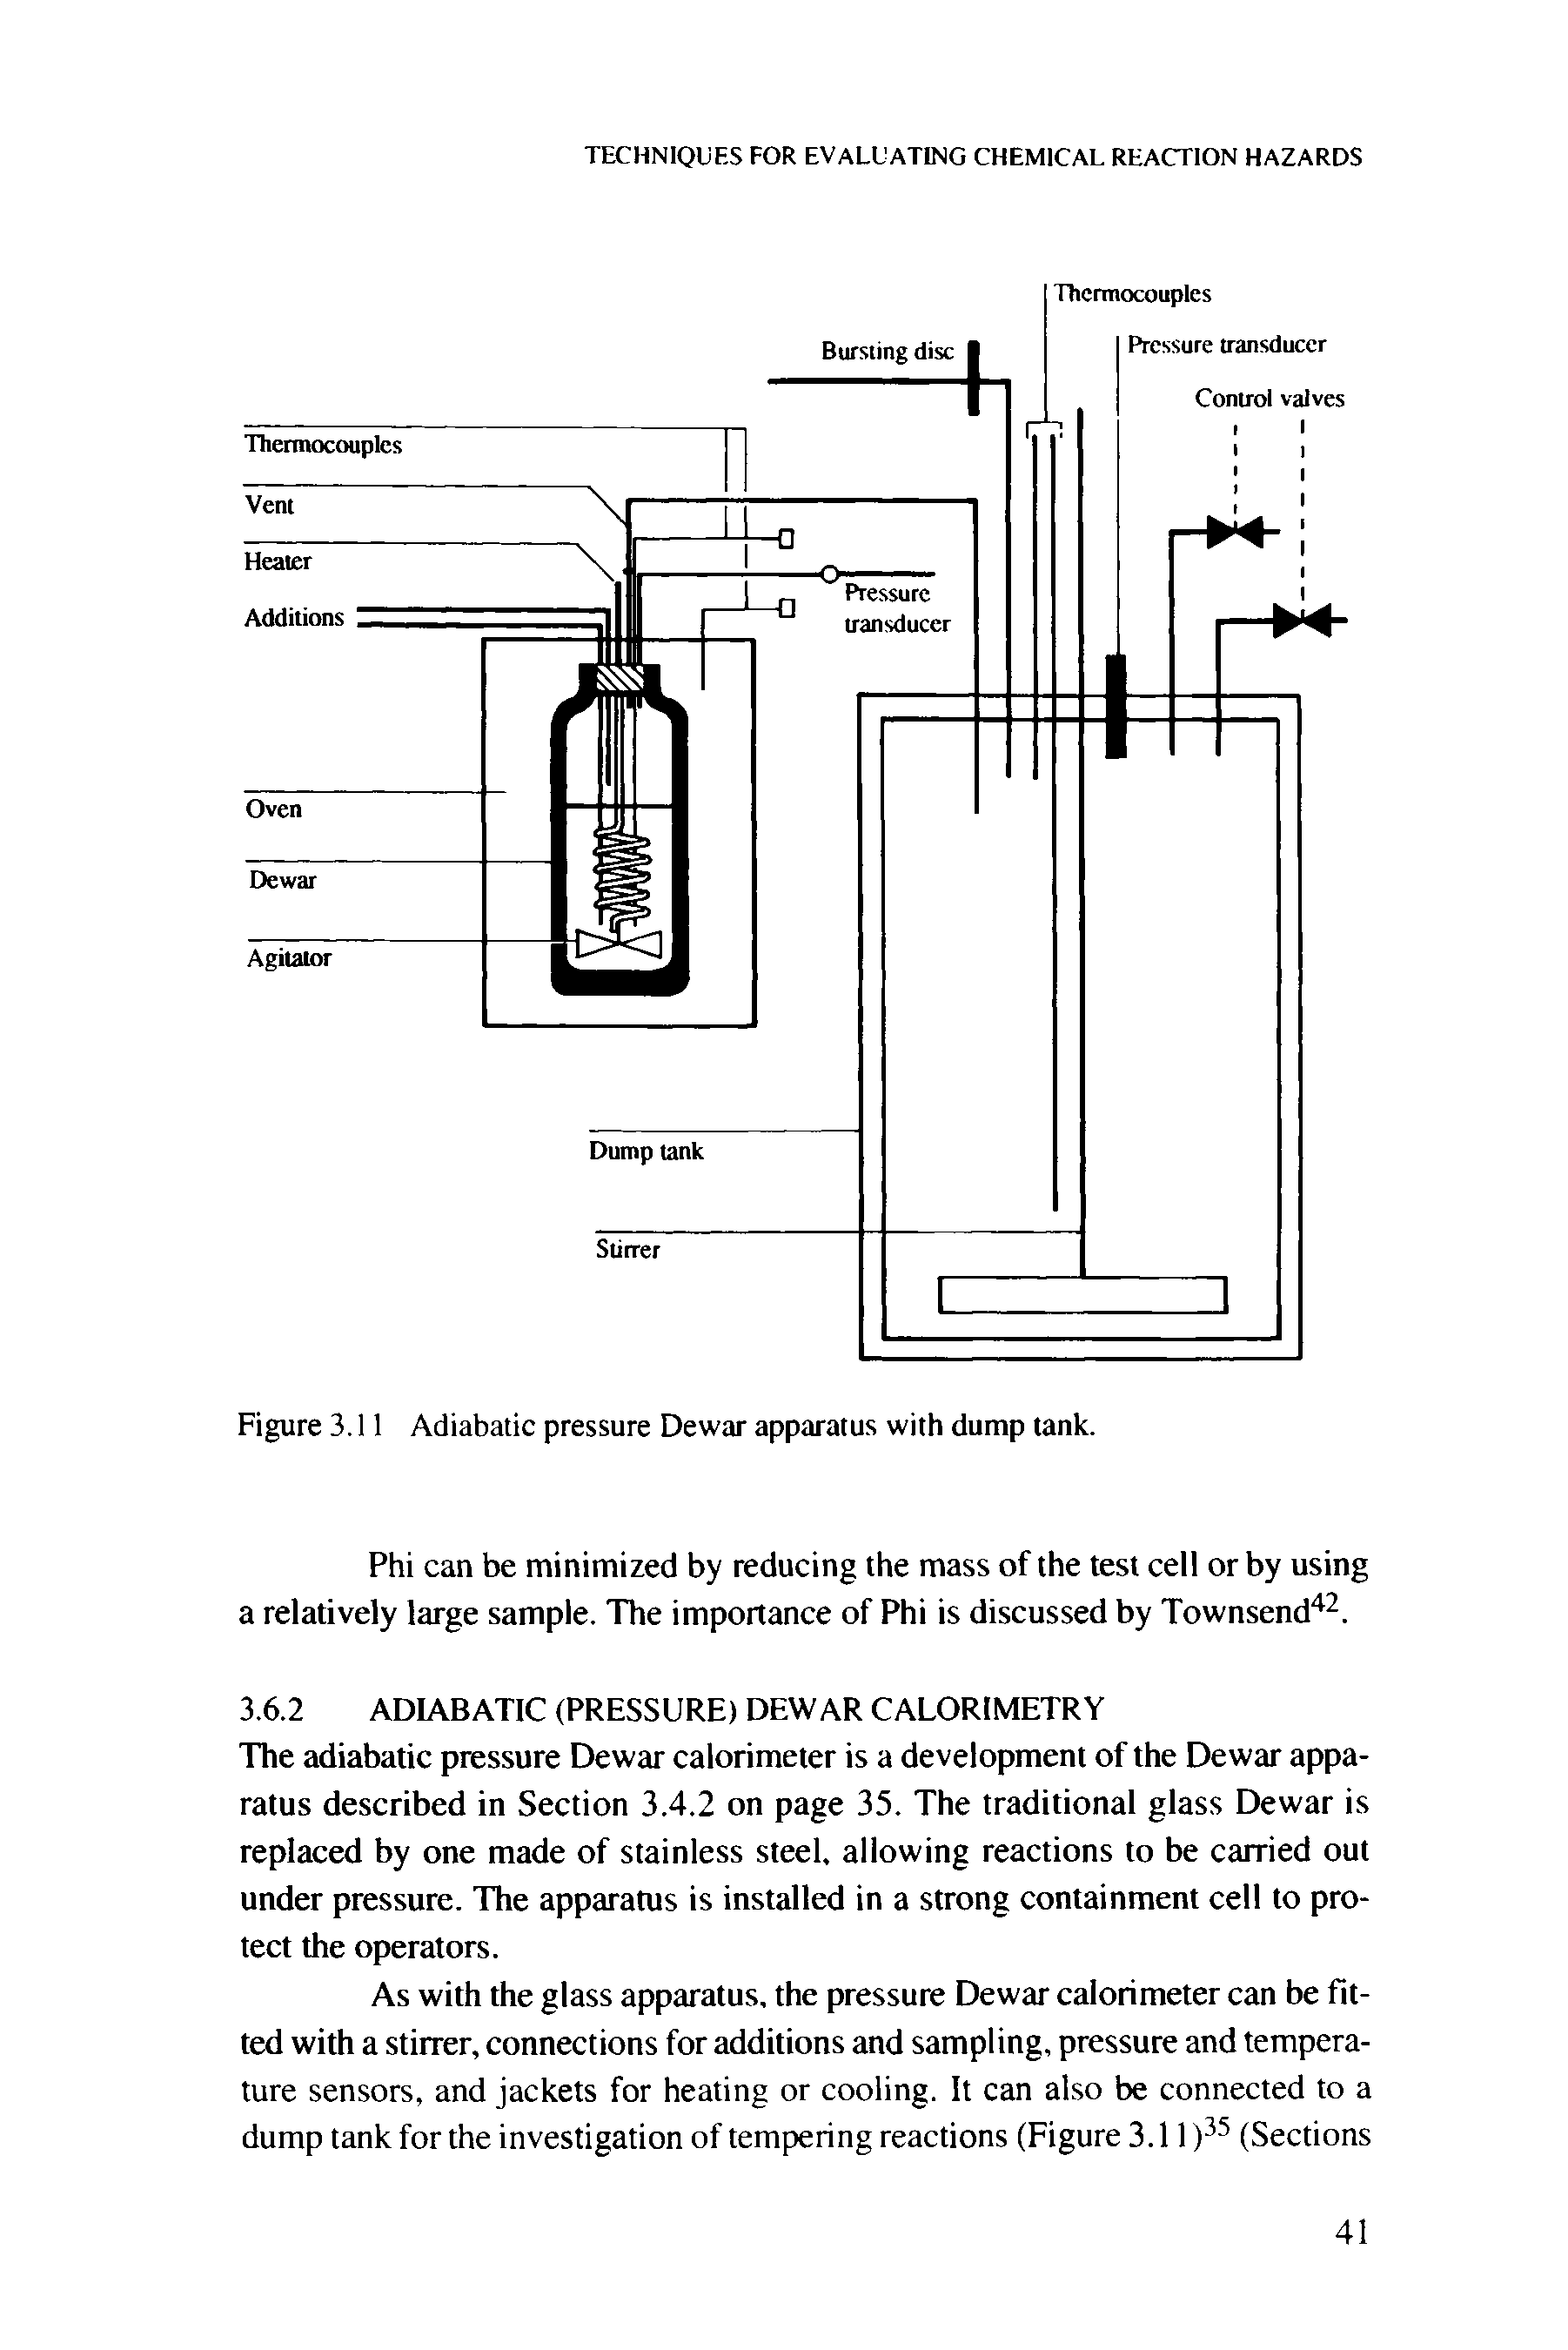 Figure 3.11 Adiabatic pressure Dewar apparatus with dump lank.